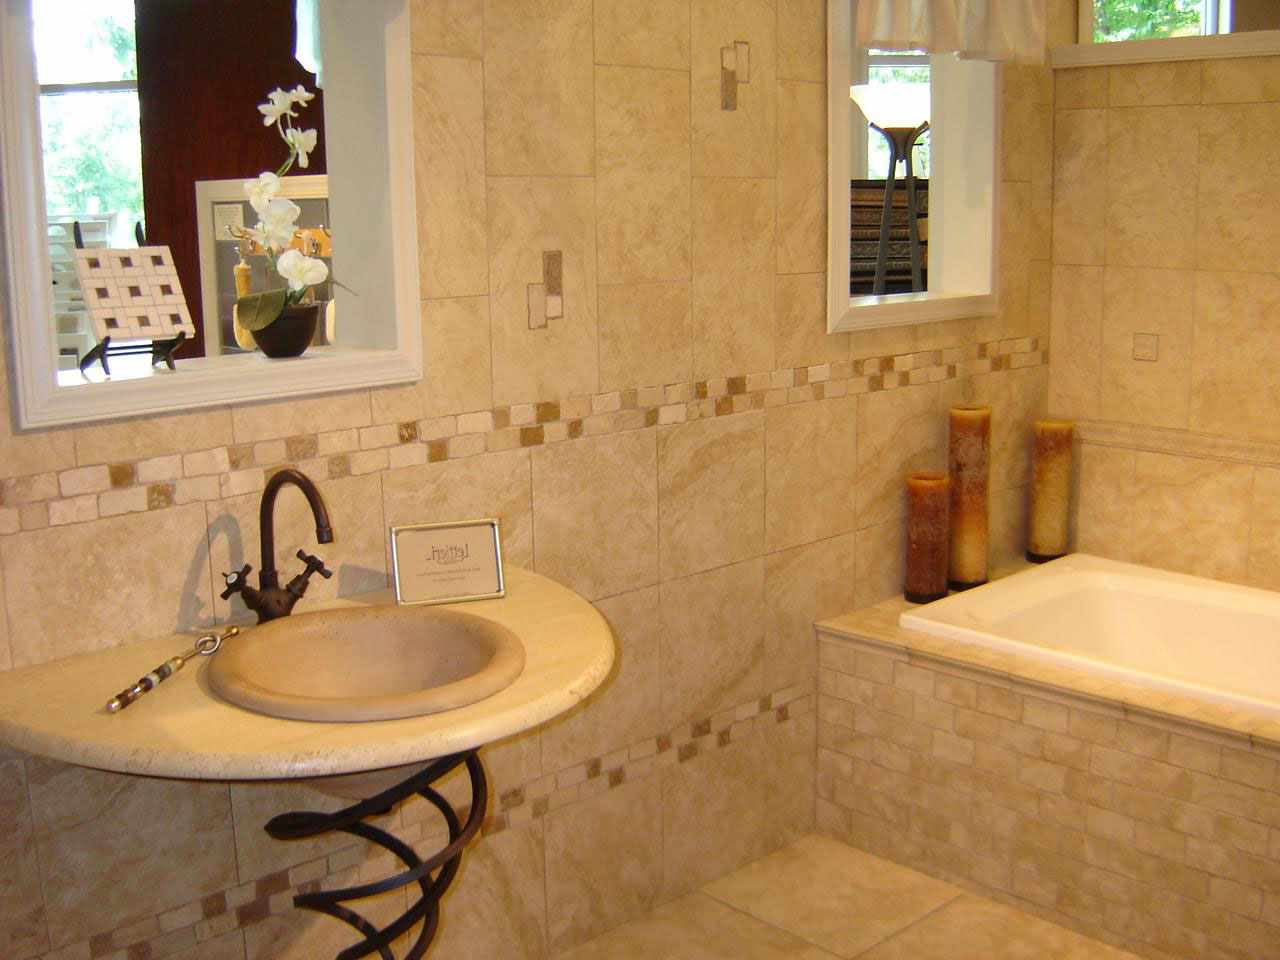 An example of a beautiful tiled bathroom